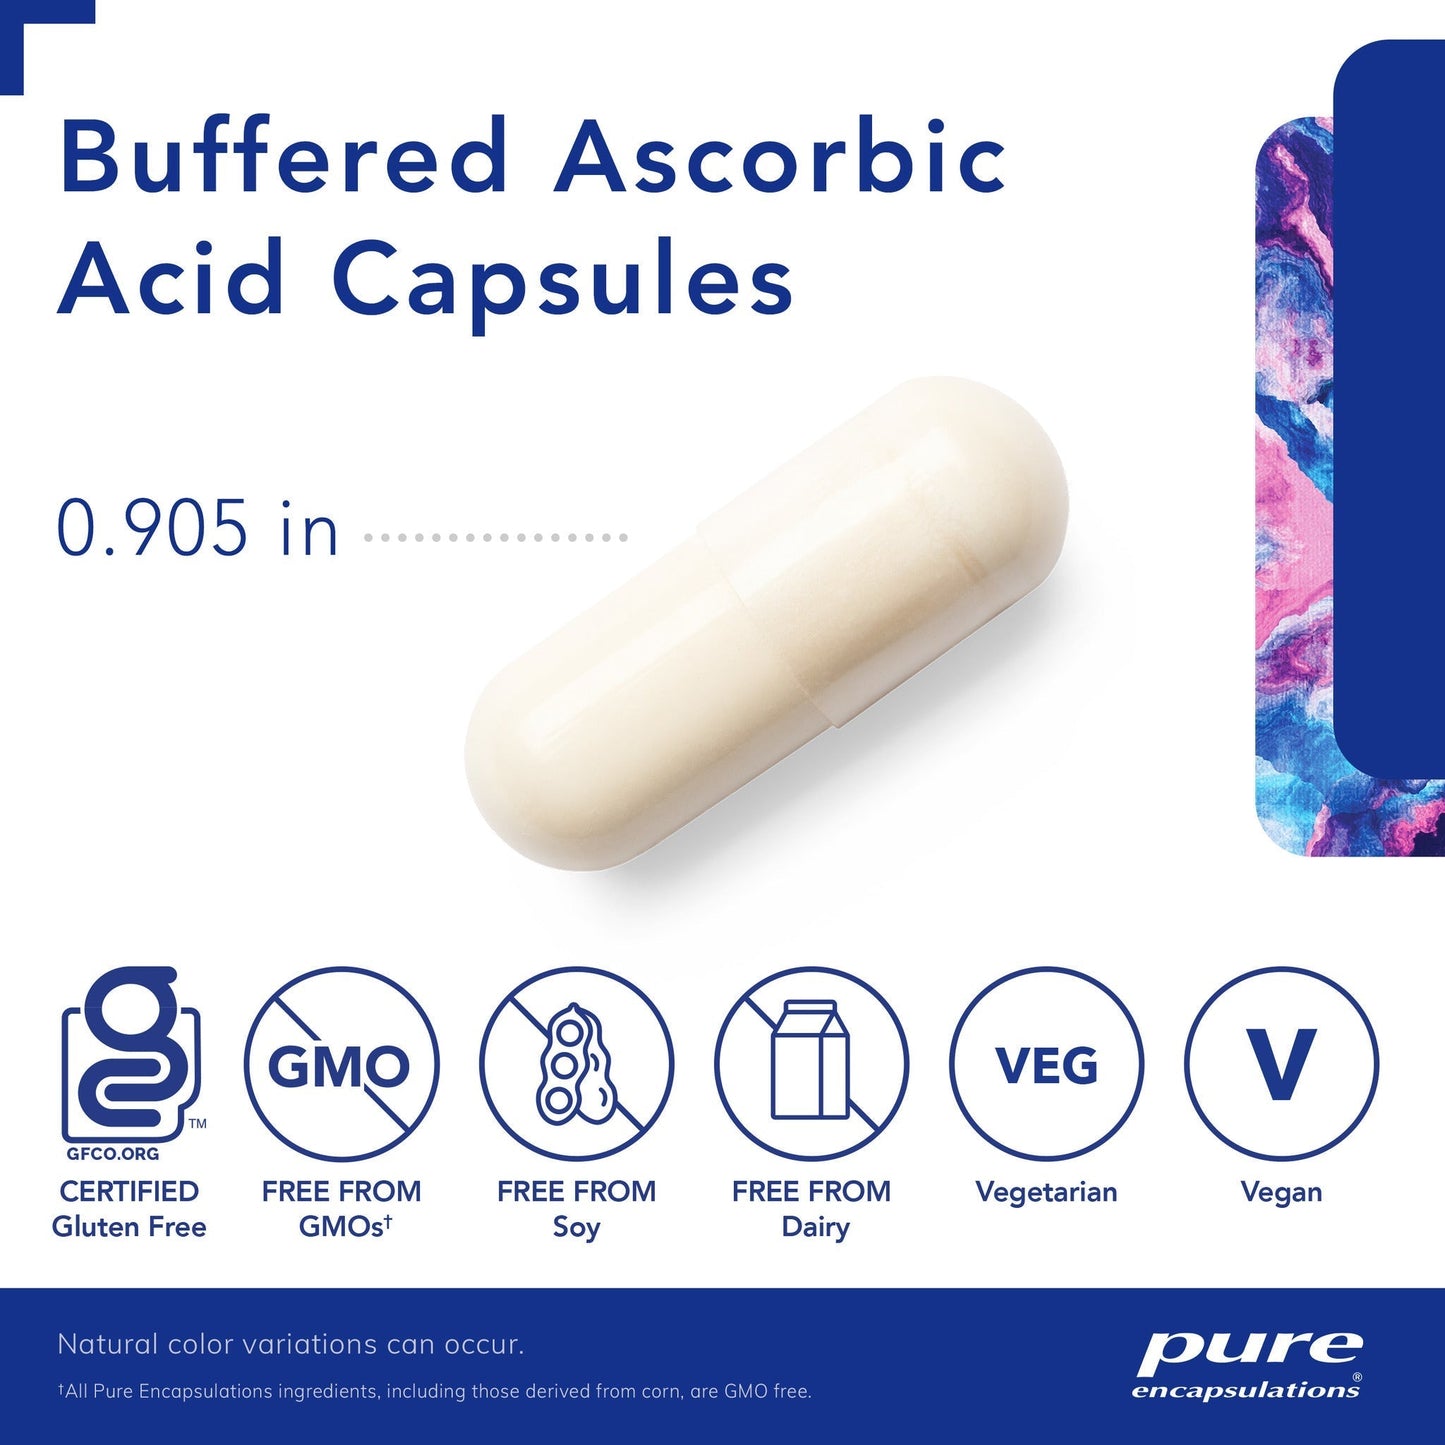 Buffered Ascorbic Acid